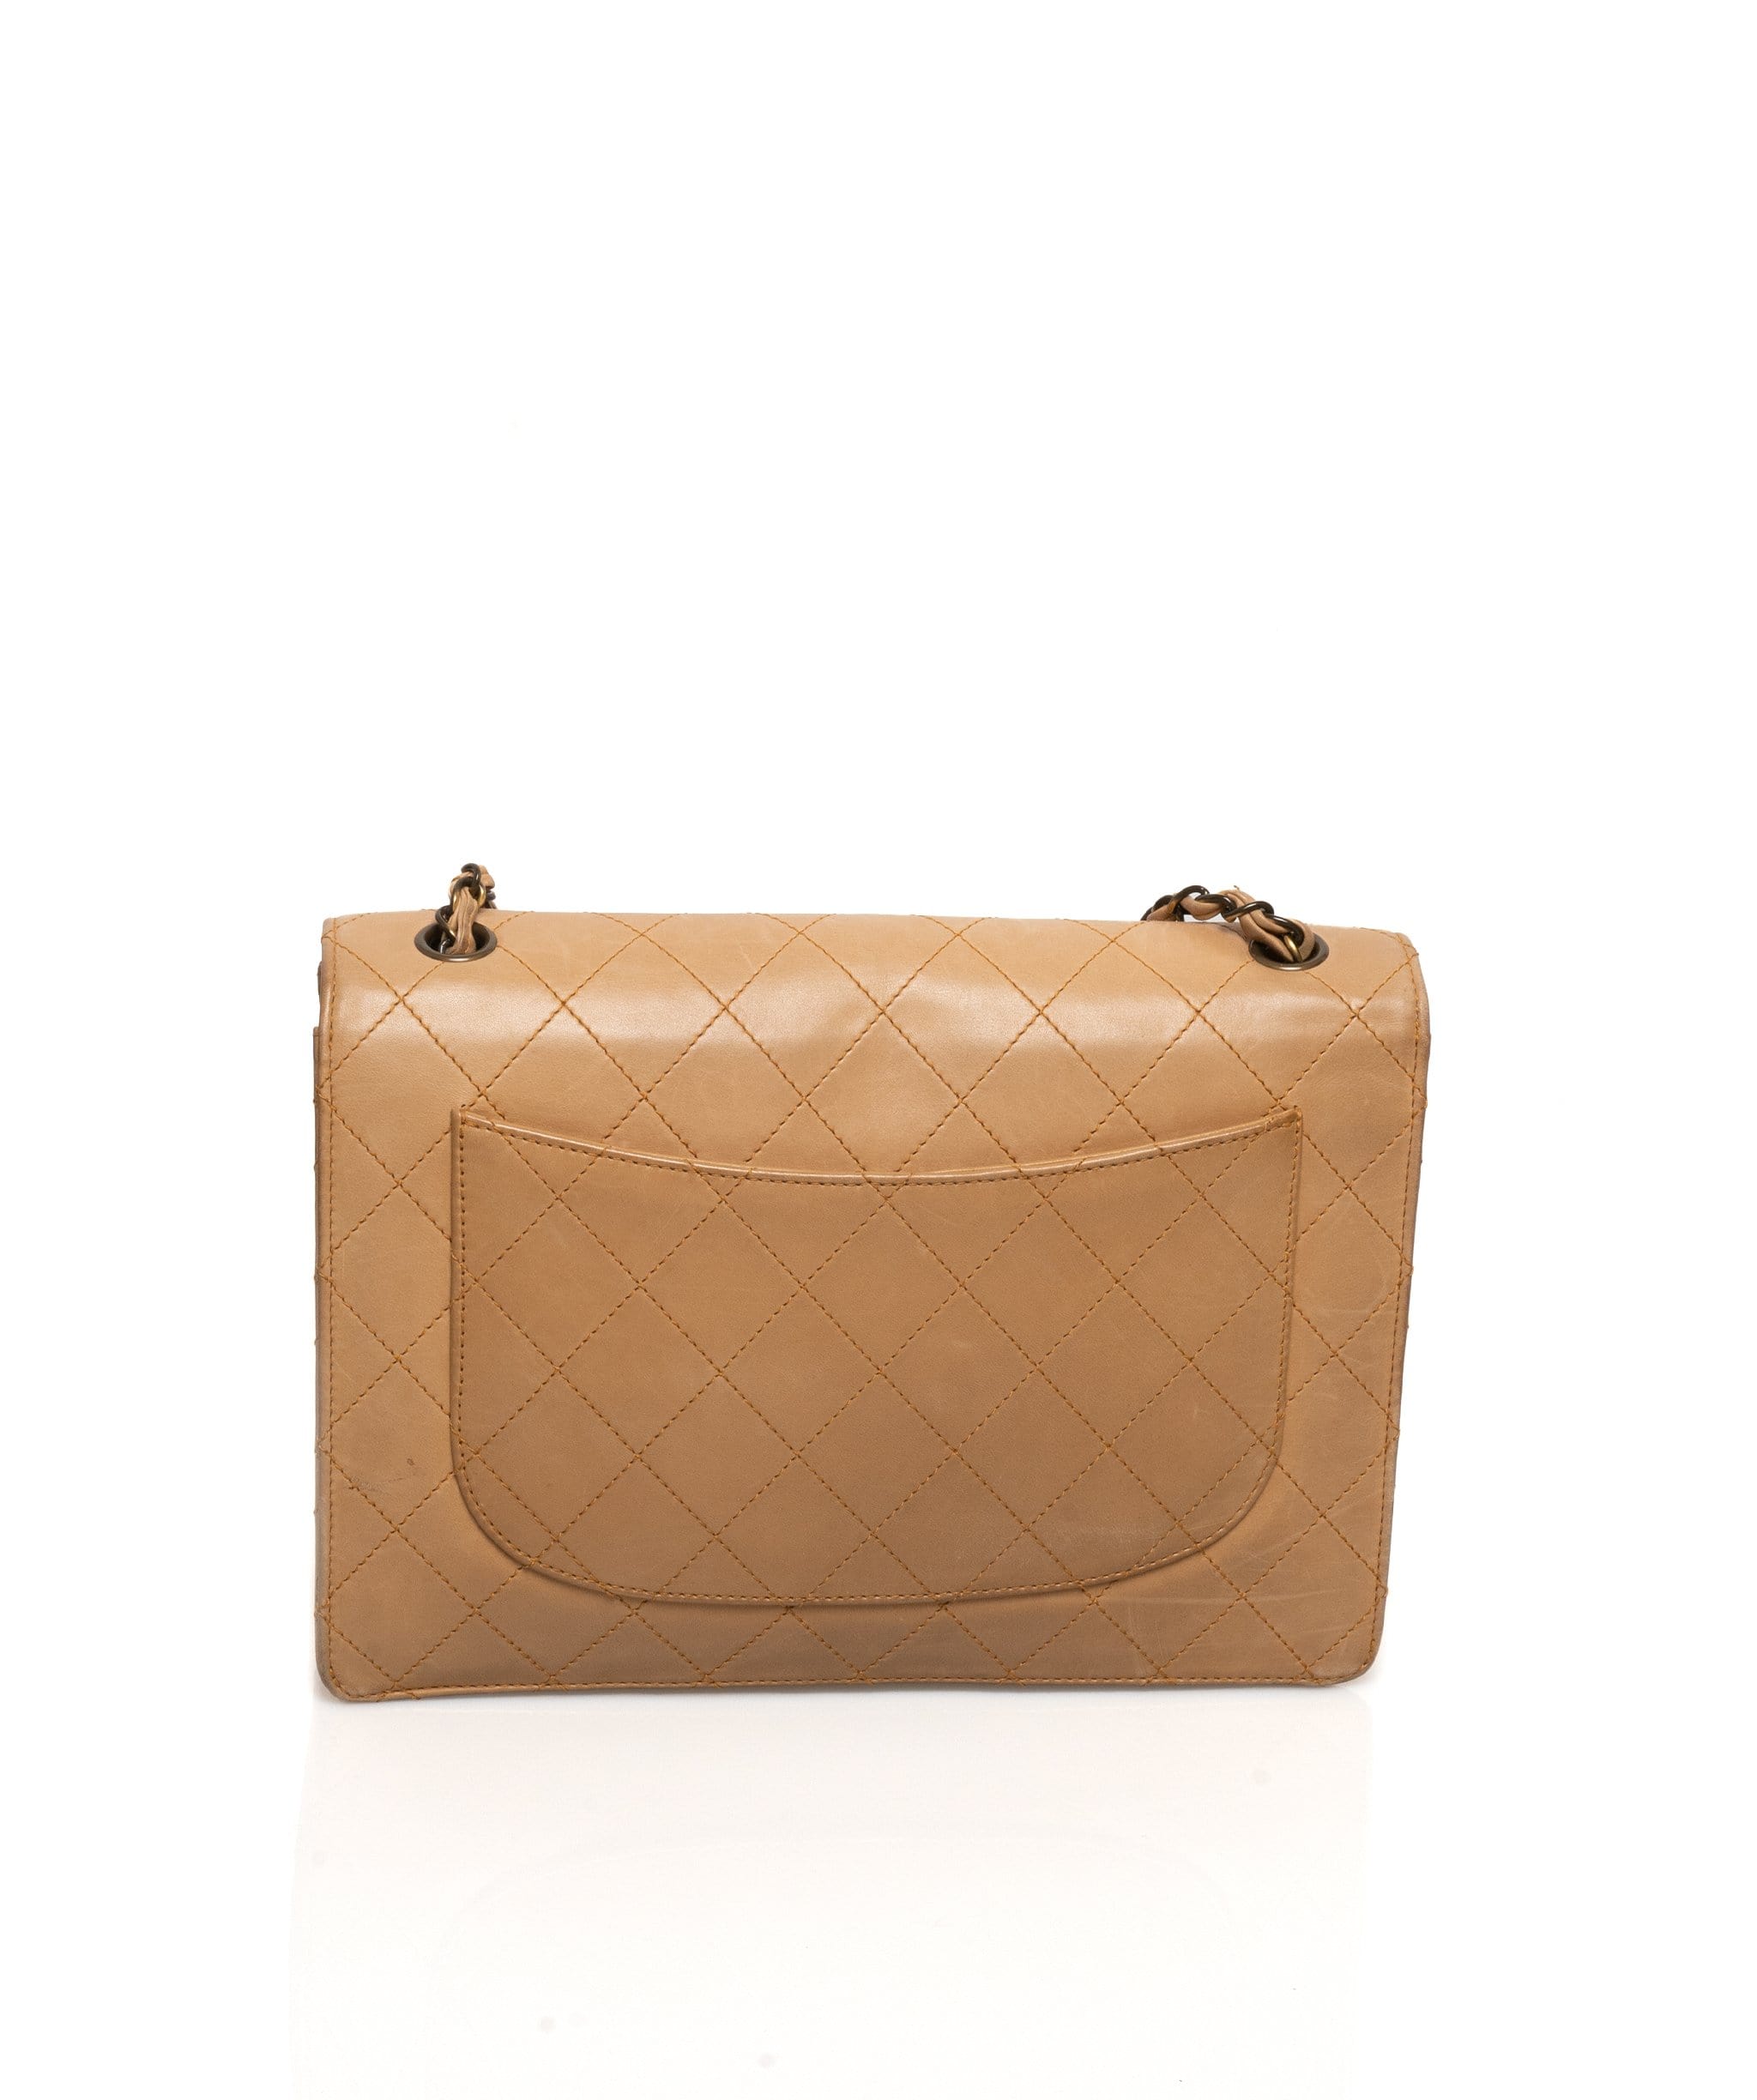 Chanel Chanel  Beige CC Timeless Lambskin Leather Jumbo Bag